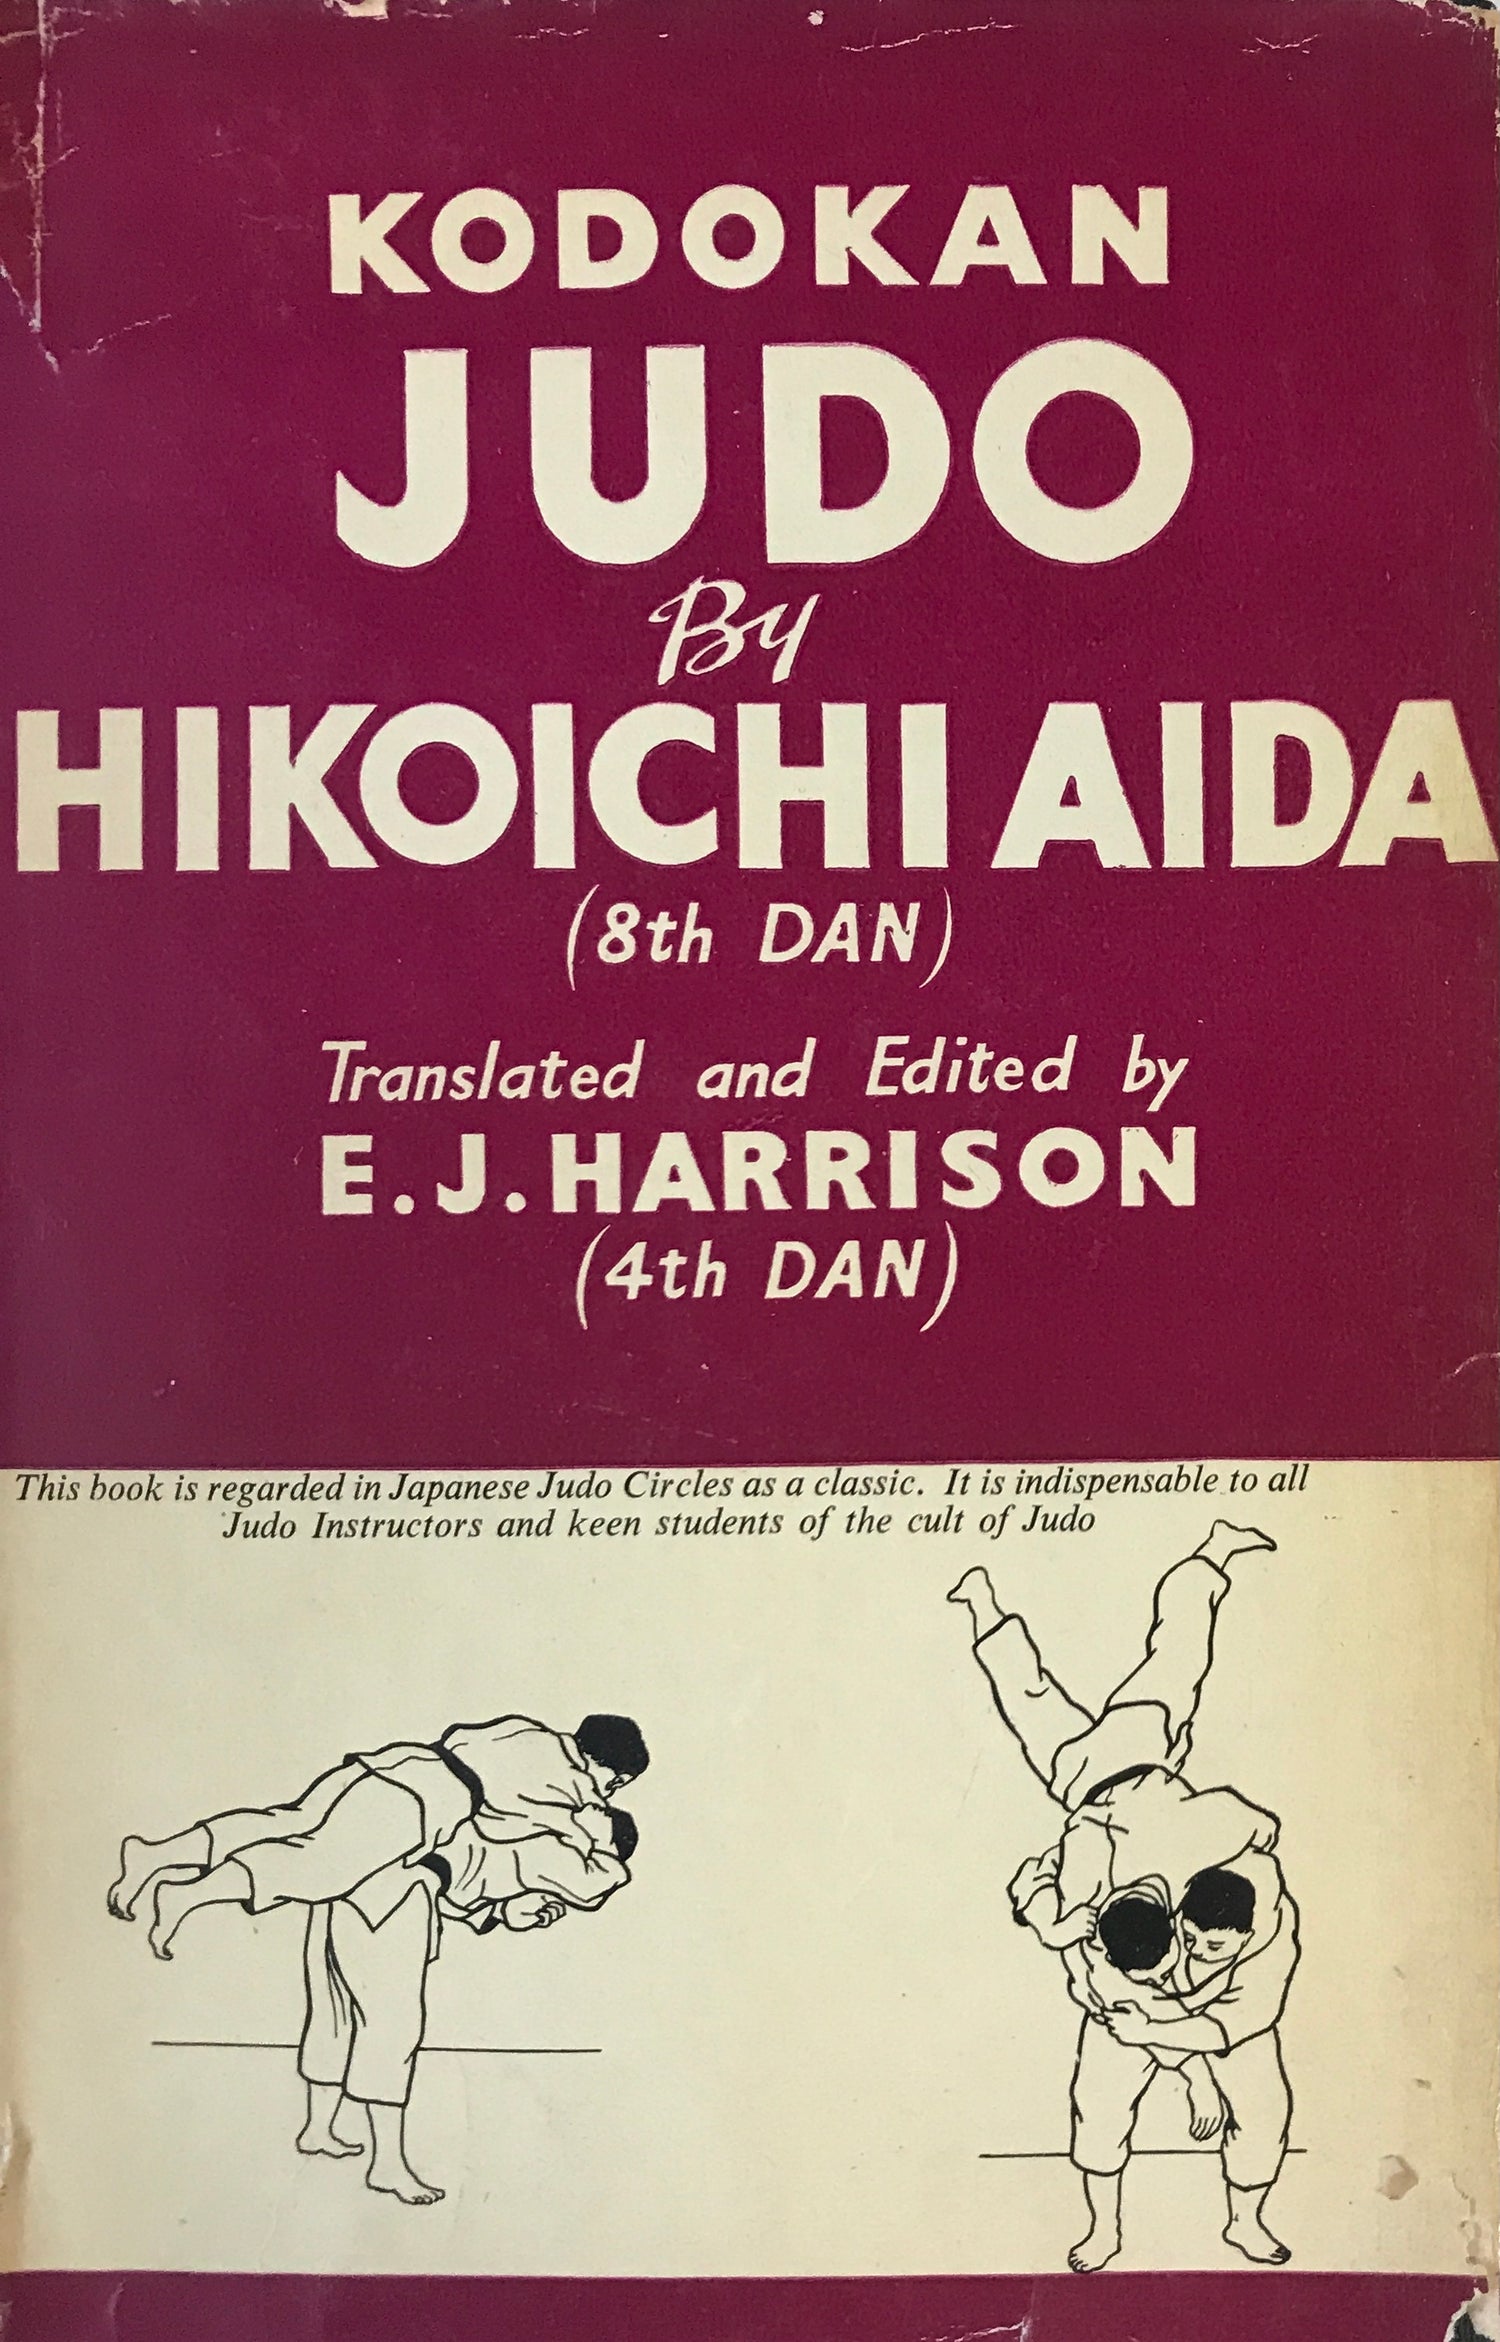 Kodokan Judo Book by Hikoichi Aida (Hardcover) (Preowned) - Budovideos Inc